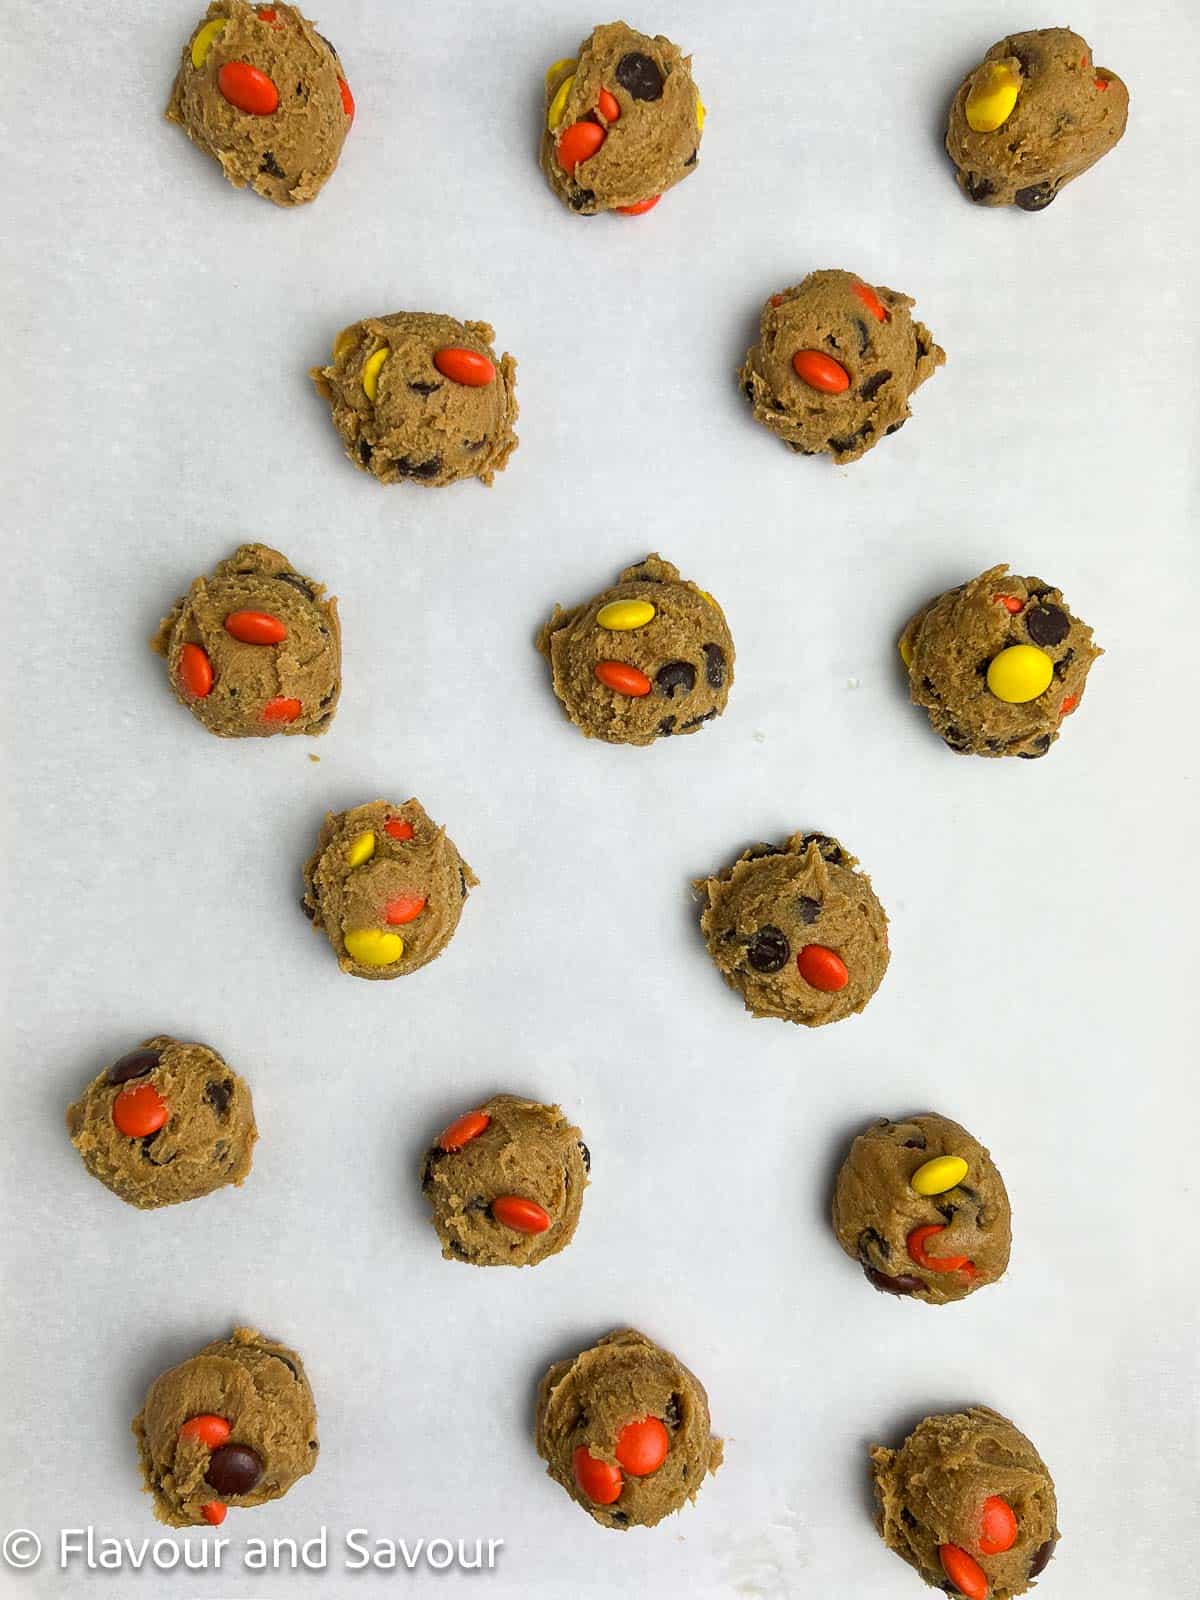 Gluten-free Reese's Pieces Halloween Cookie dough balls on a baking sheet.